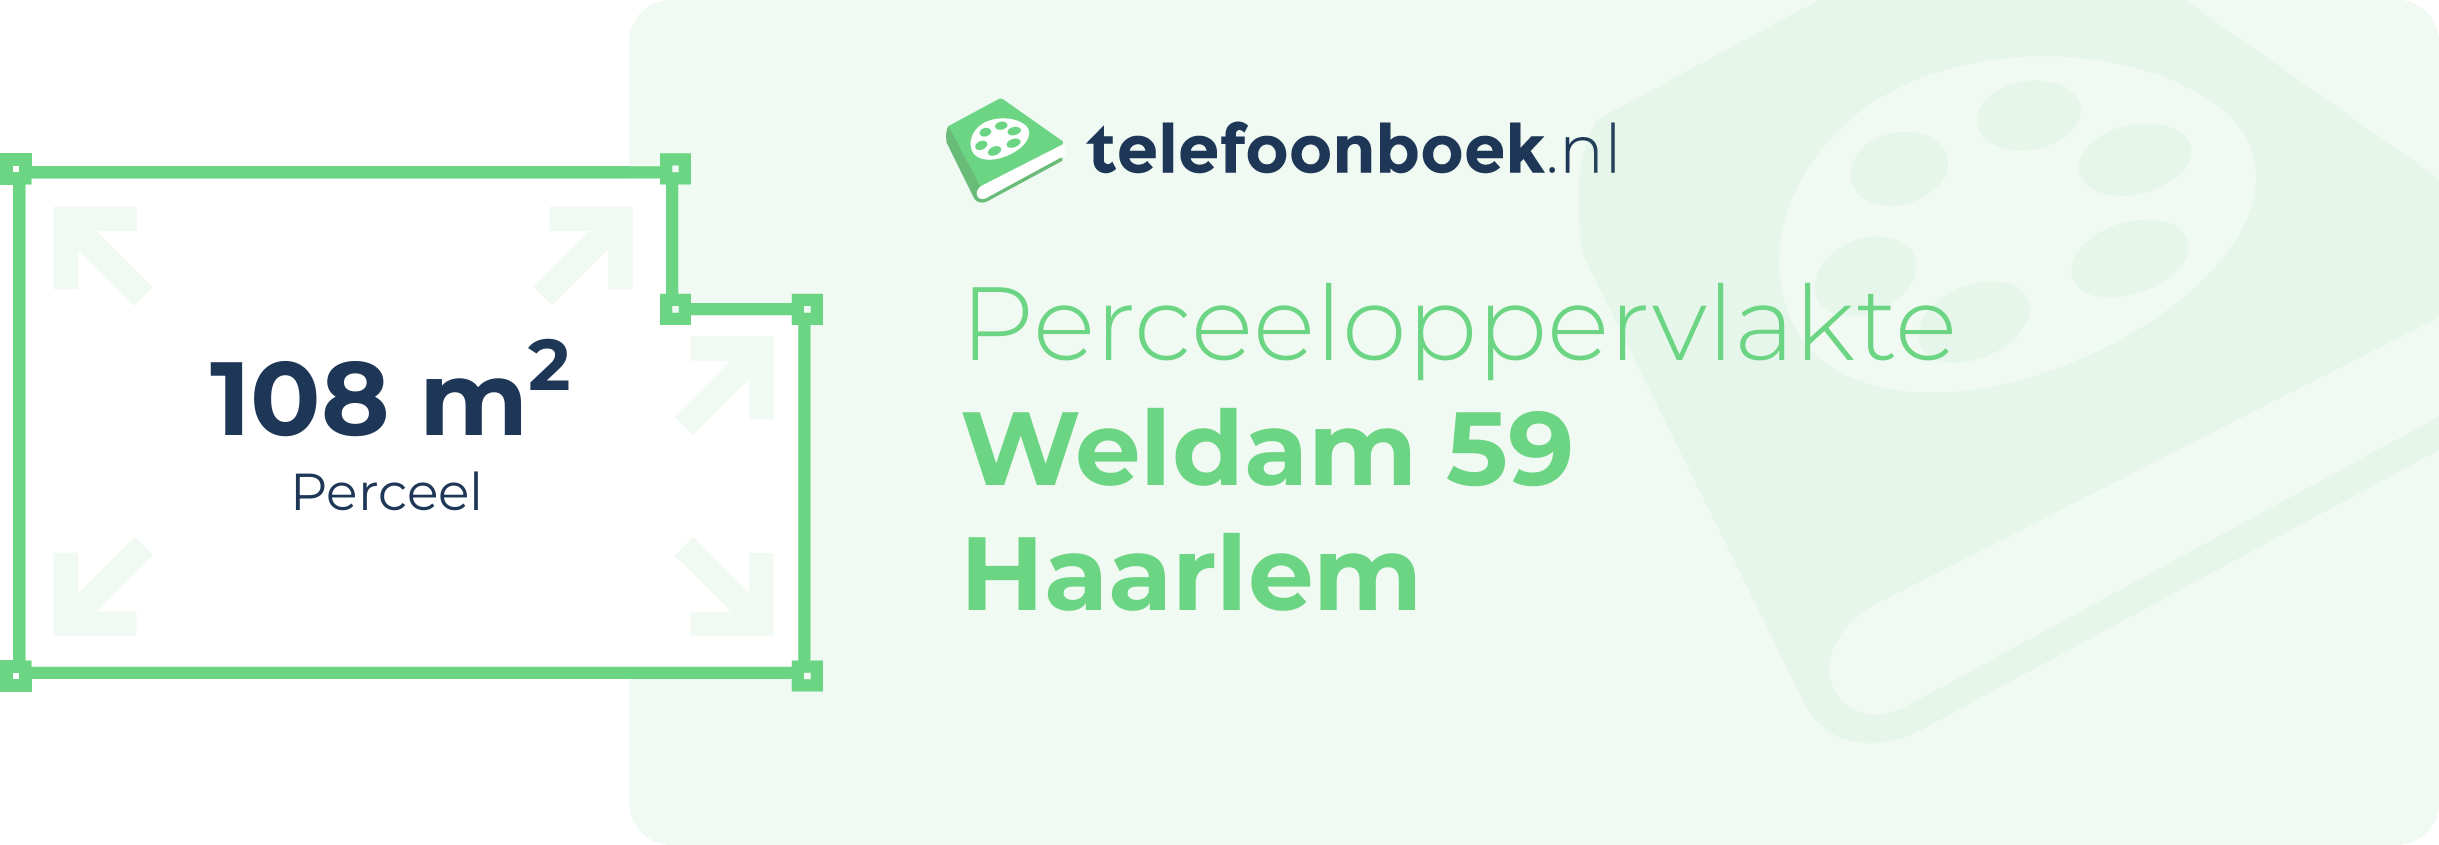 Perceeloppervlakte Weldam 59 Haarlem